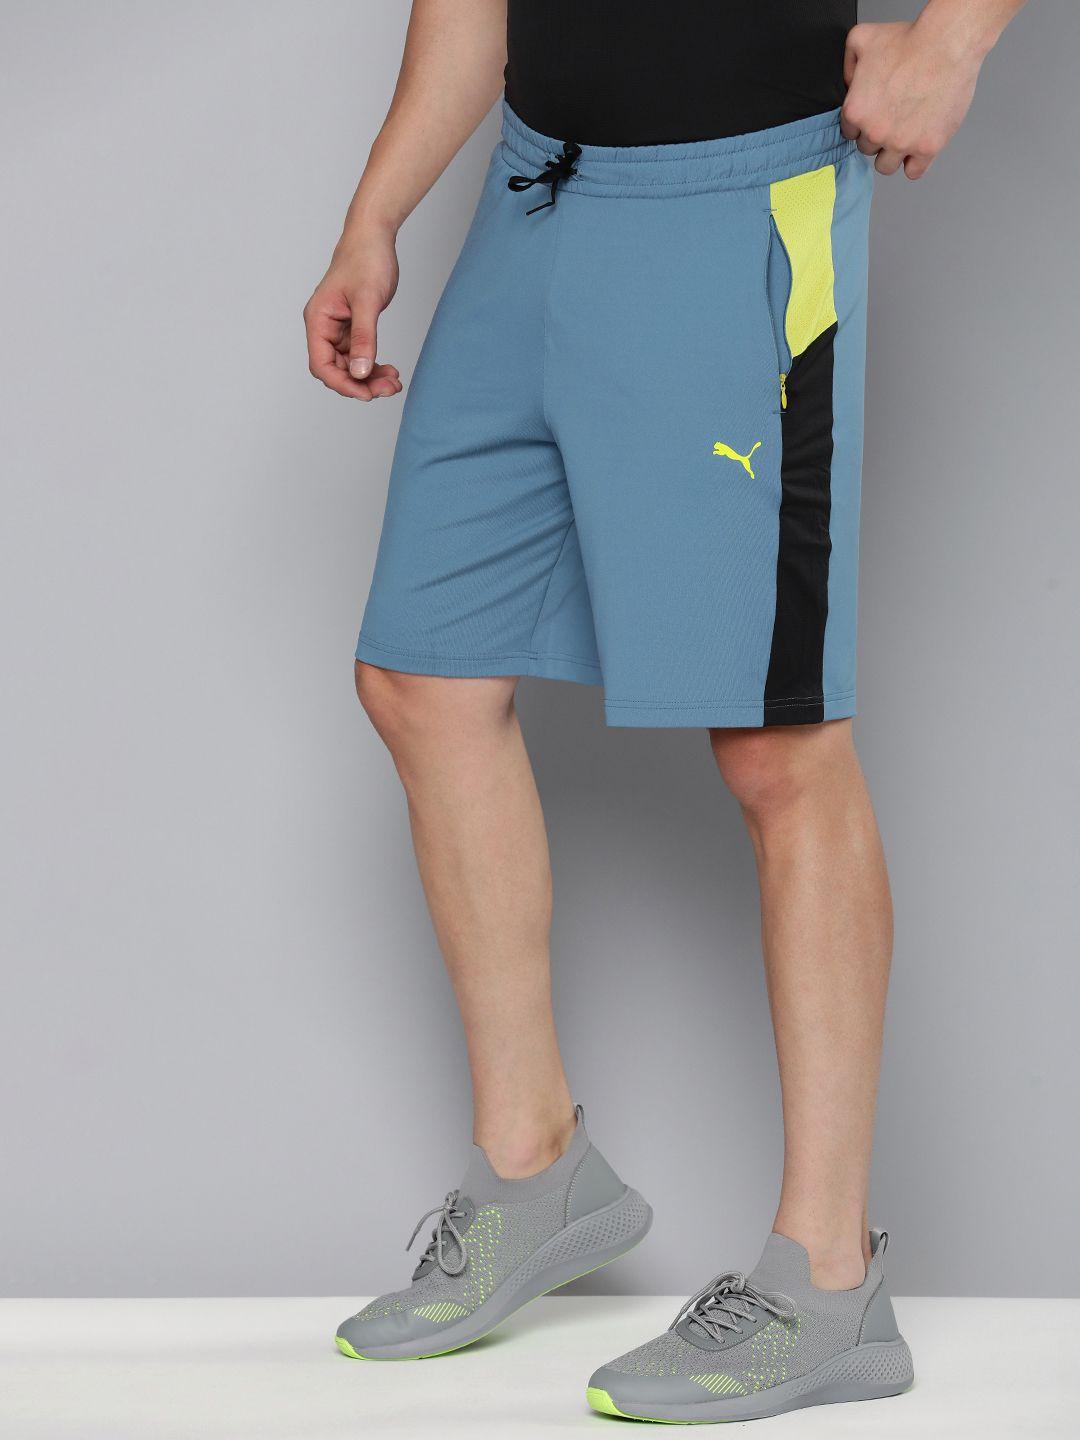 one8 x puma men virat kohli side striped slim fit drycell training sports shorts